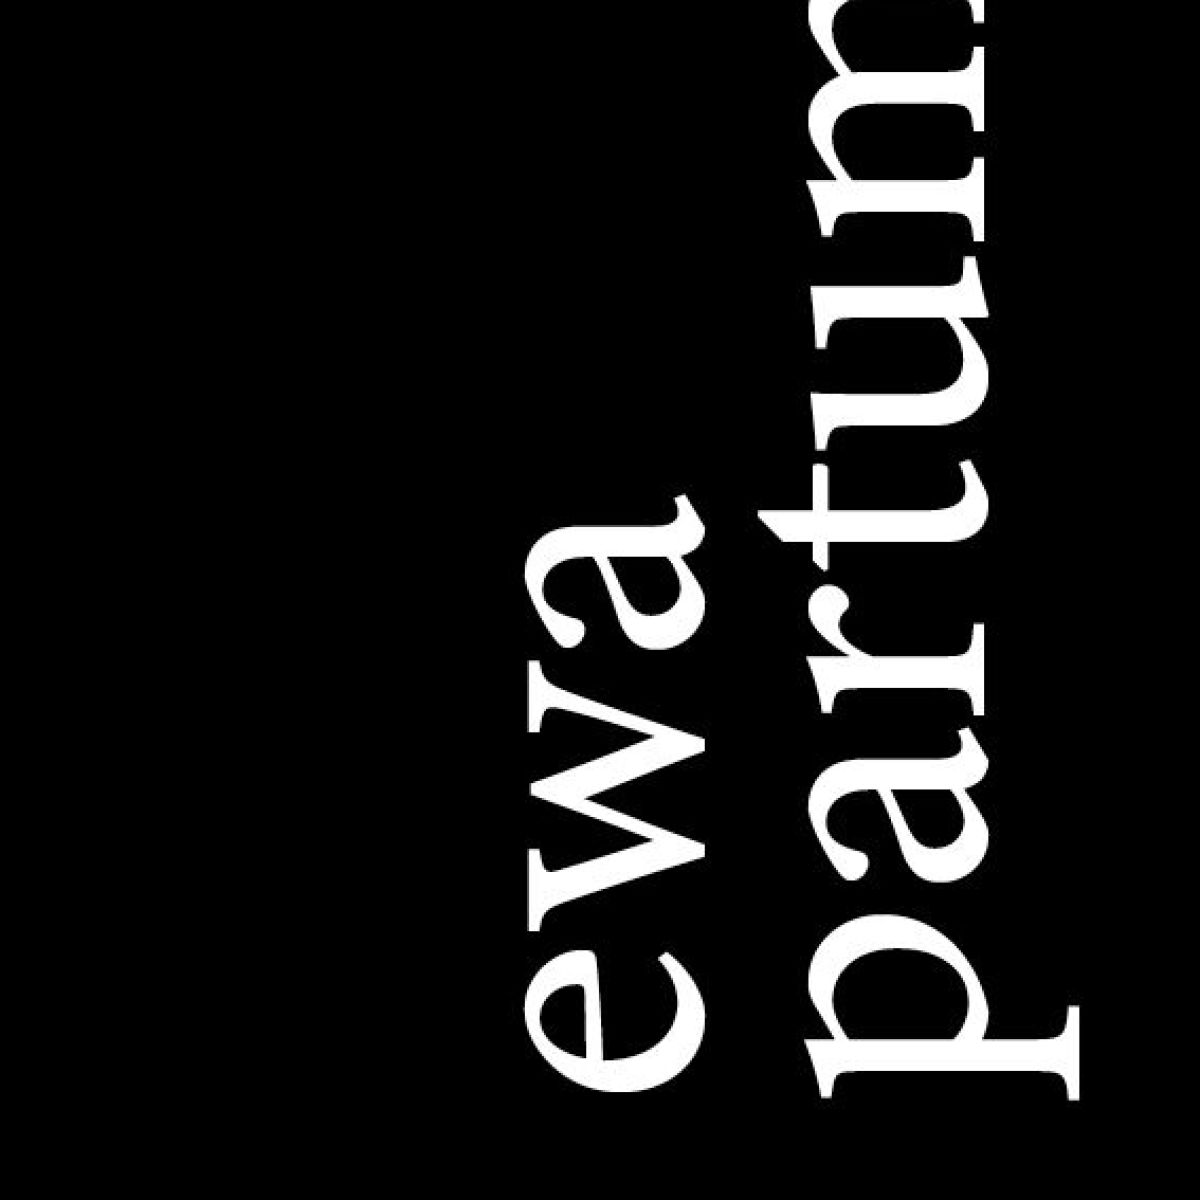 Ewa Partum - nowa książka Alternativa Editions